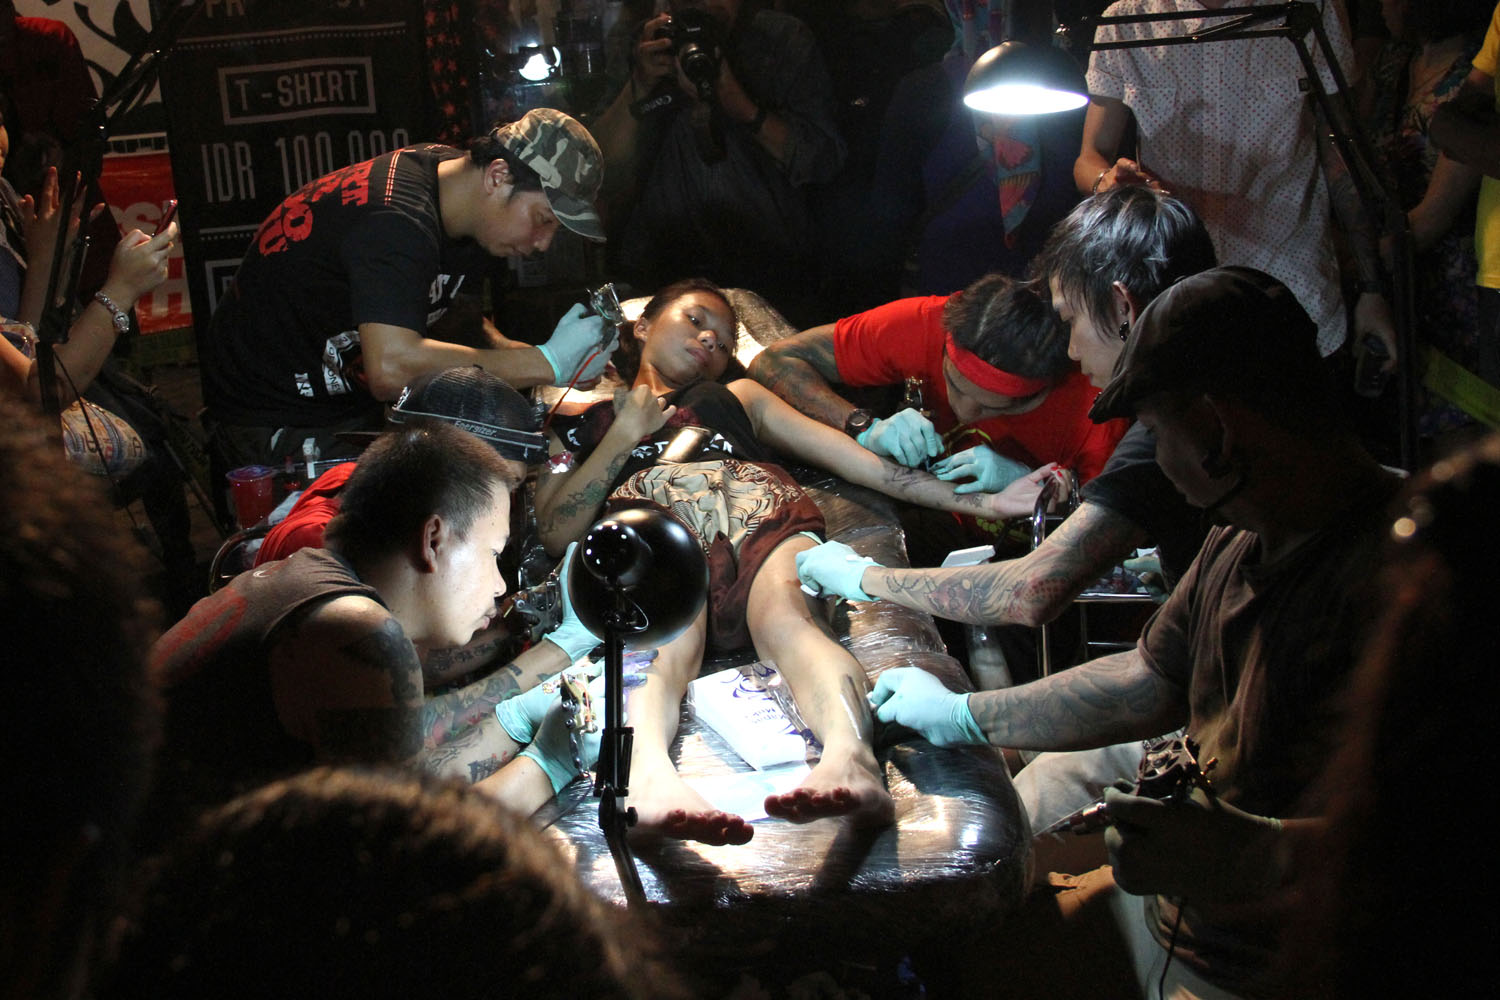 Six people tattoo one women simultaneously in Manado